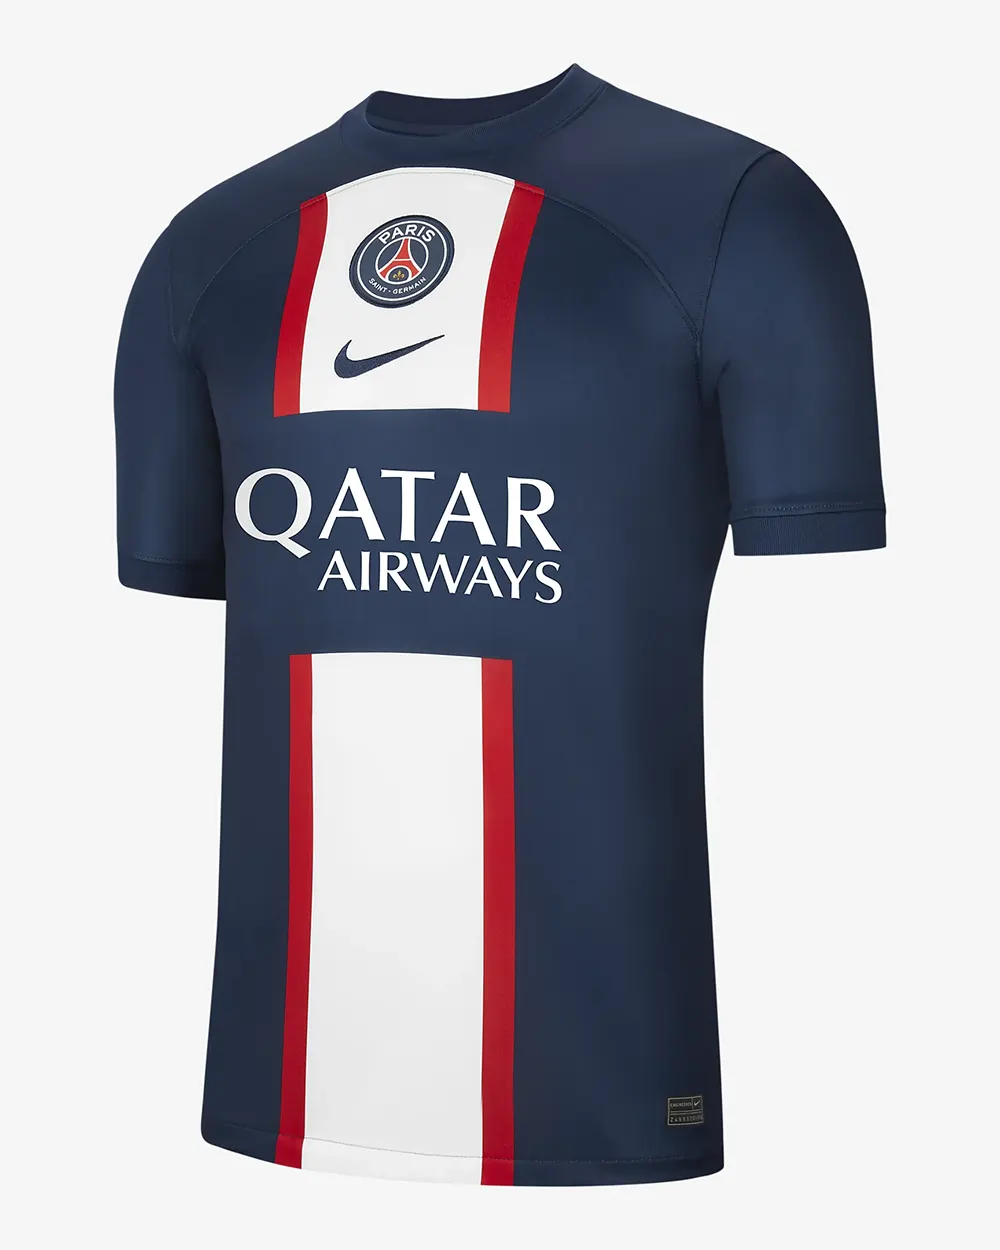 Paris Saint-Germain will have new jerseys next season after